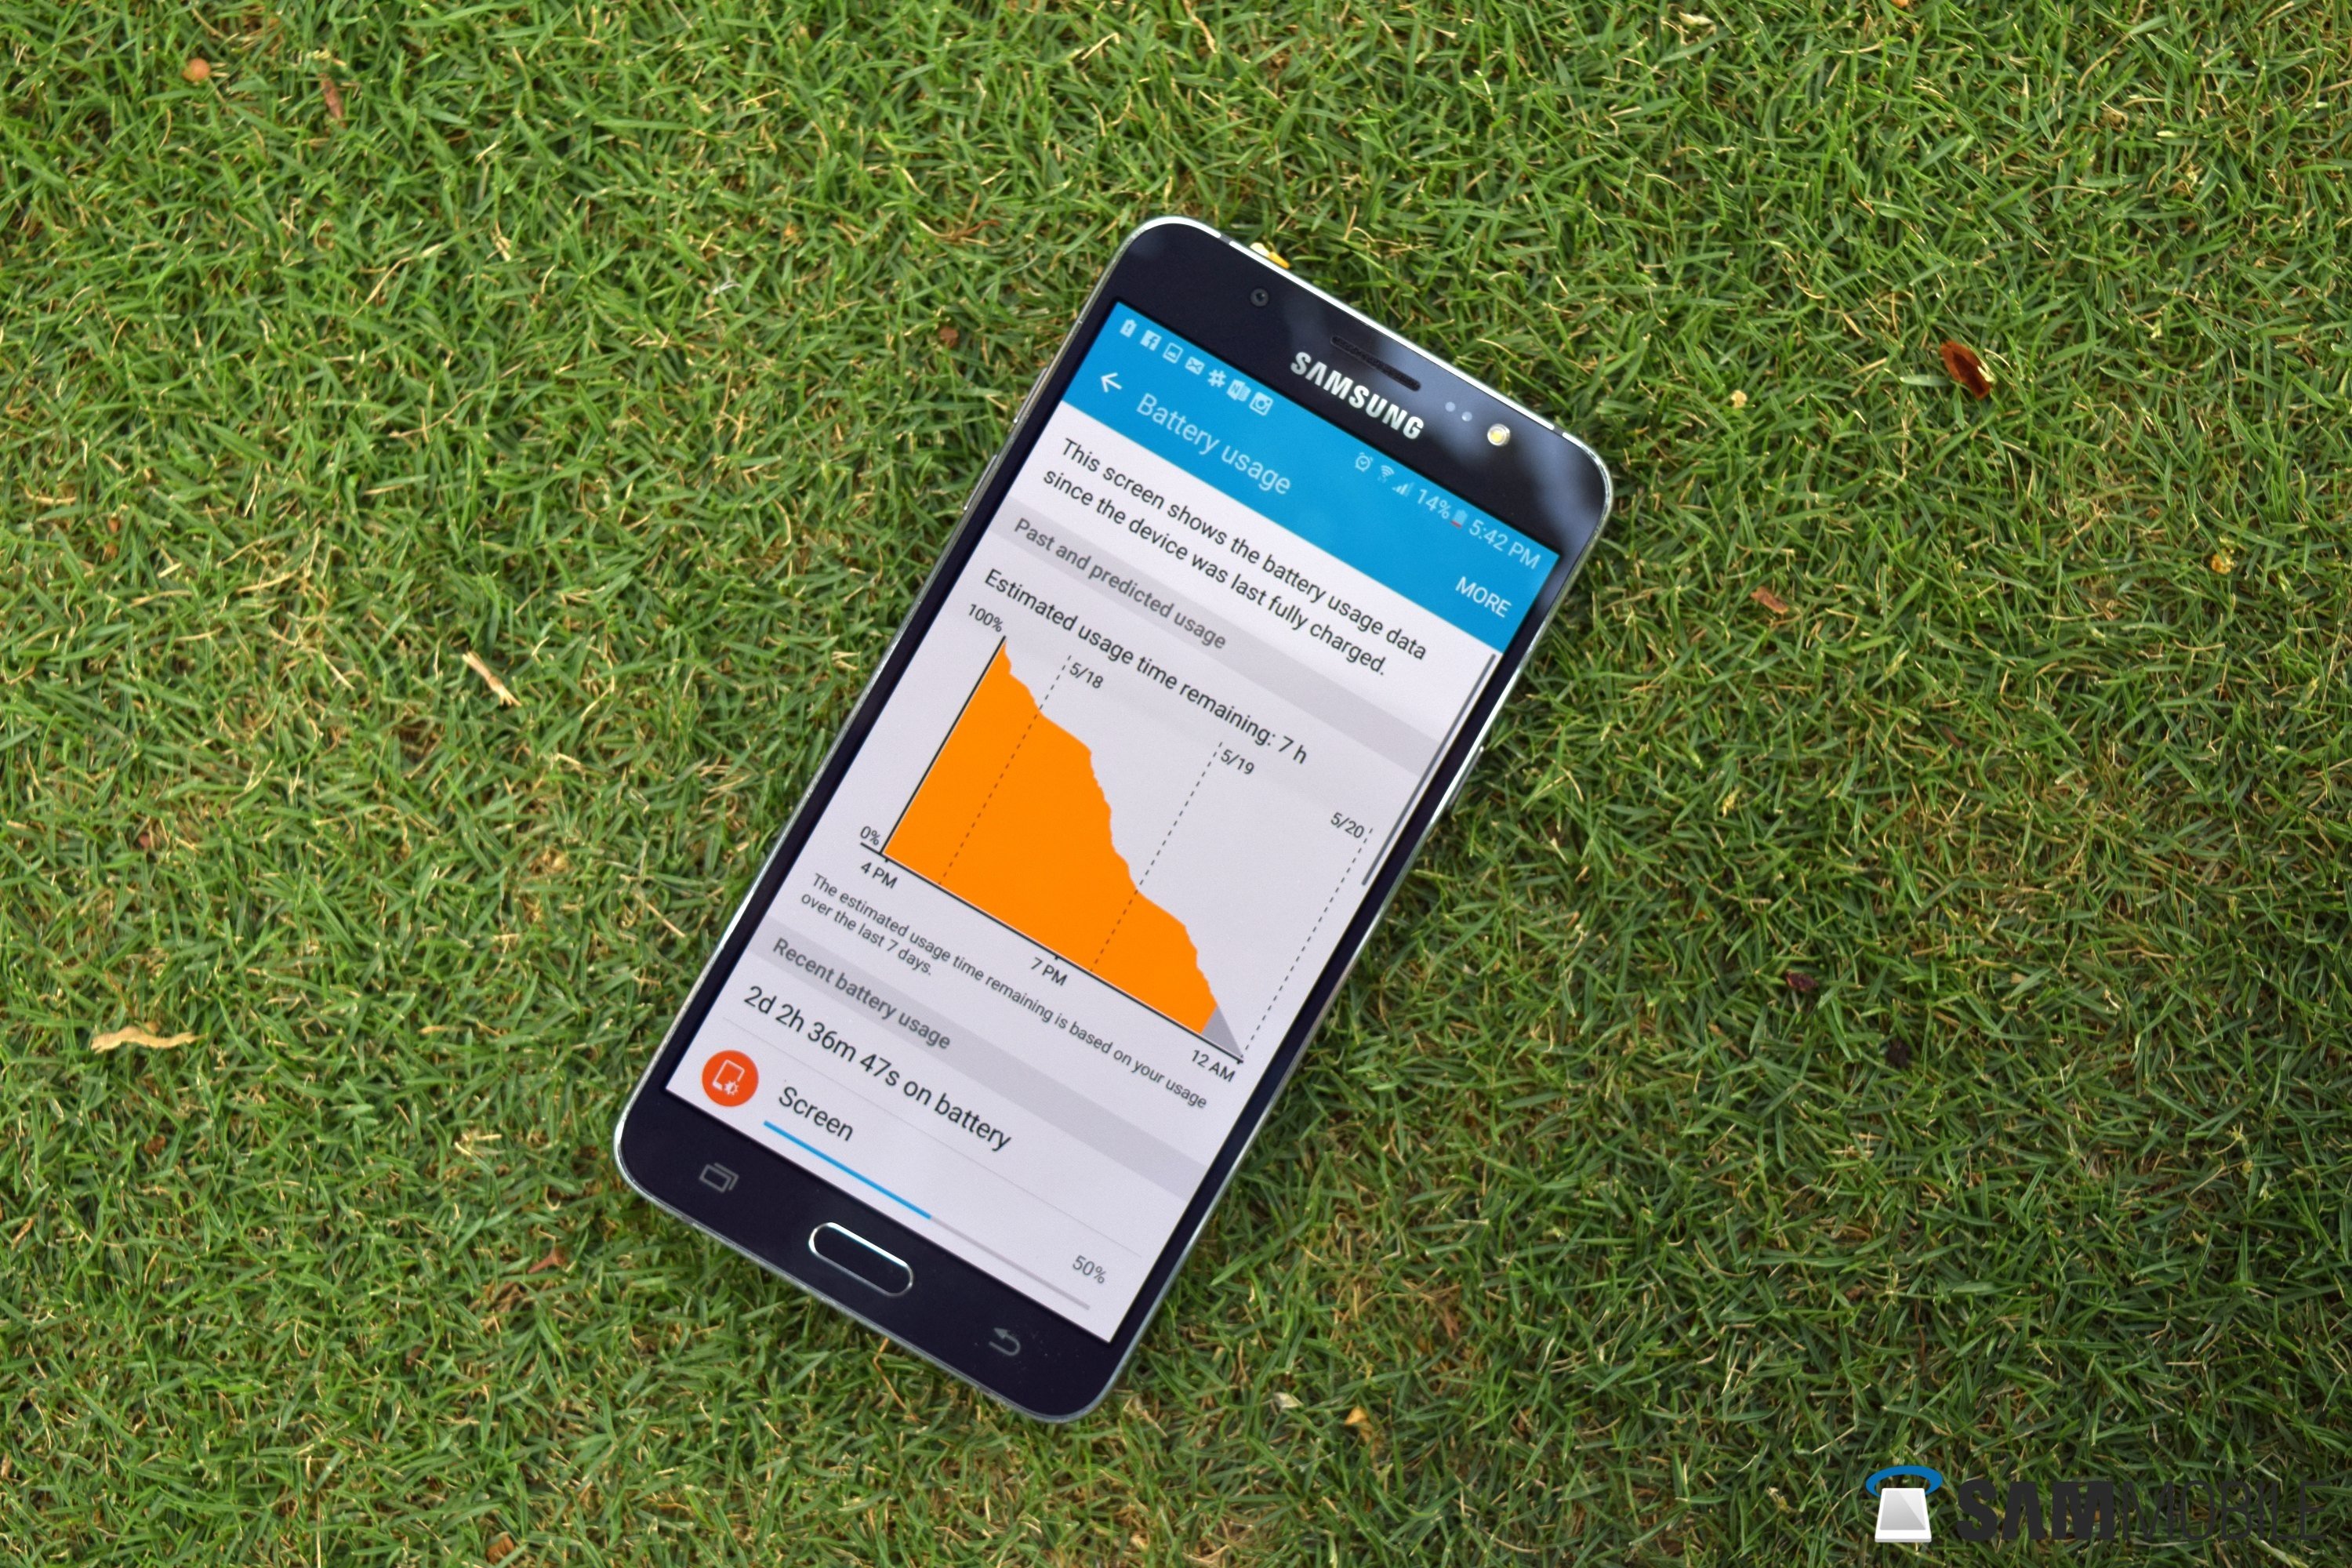 Samsung Galaxy J5 2016 And Galaxy J7 2016 Review SamMobile